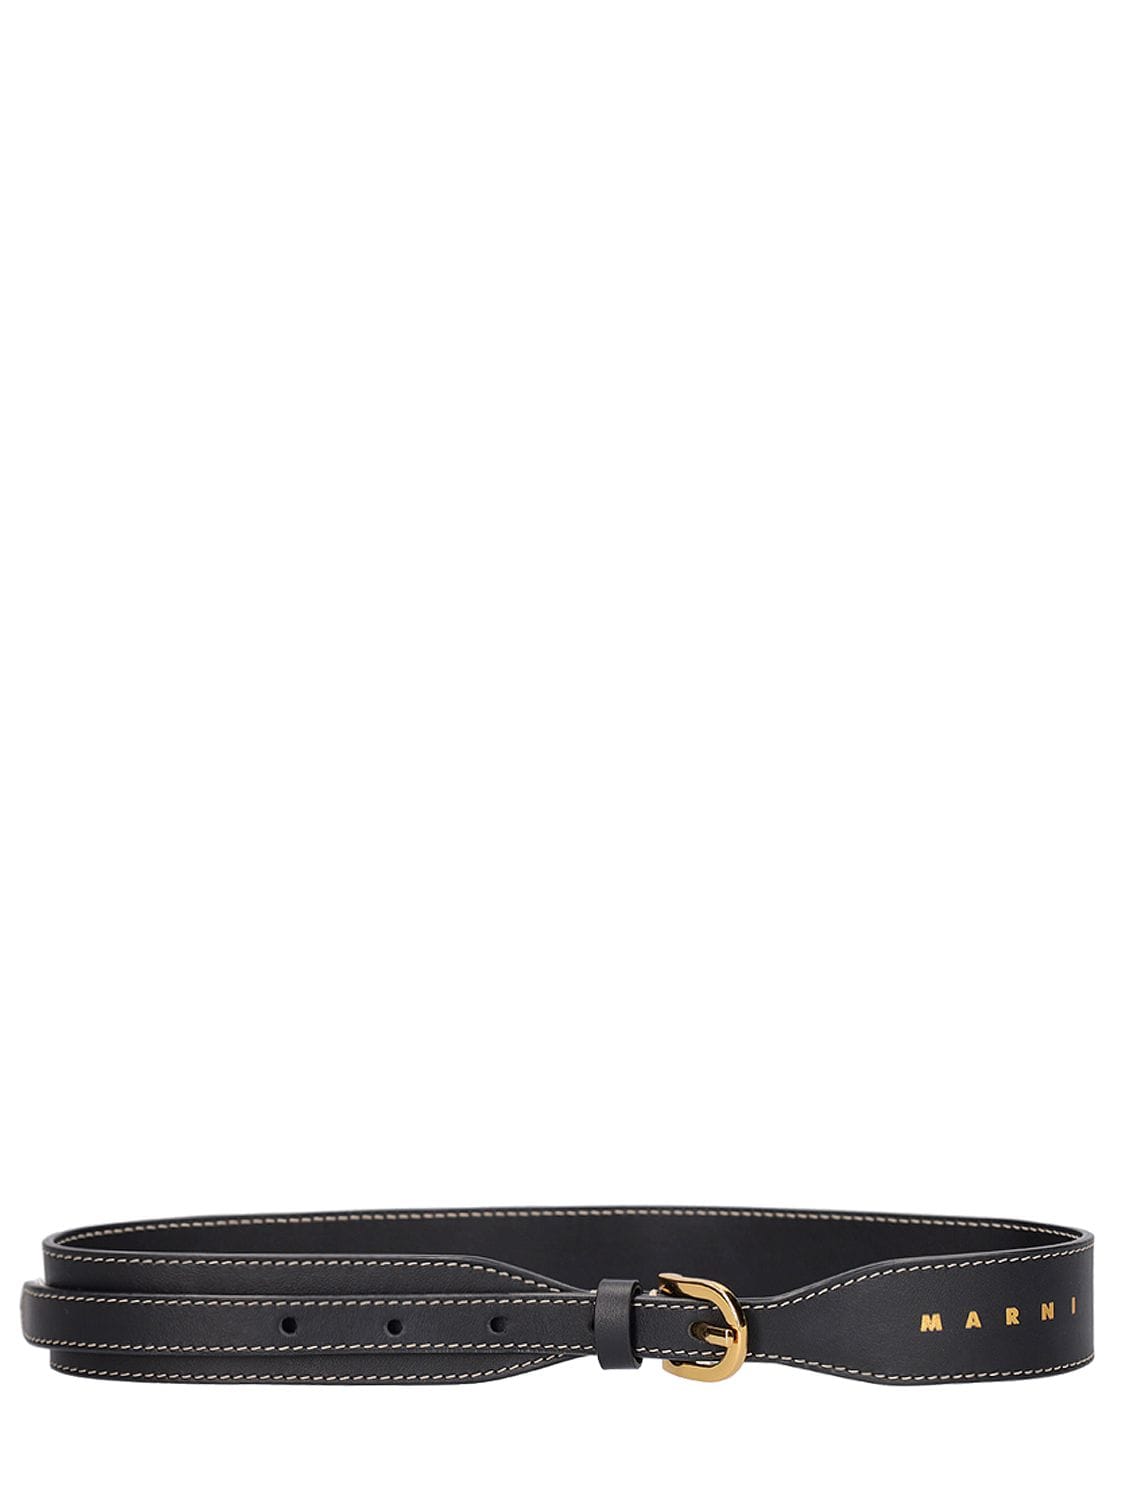 Marni Leather Belt W/logo Detail In Black